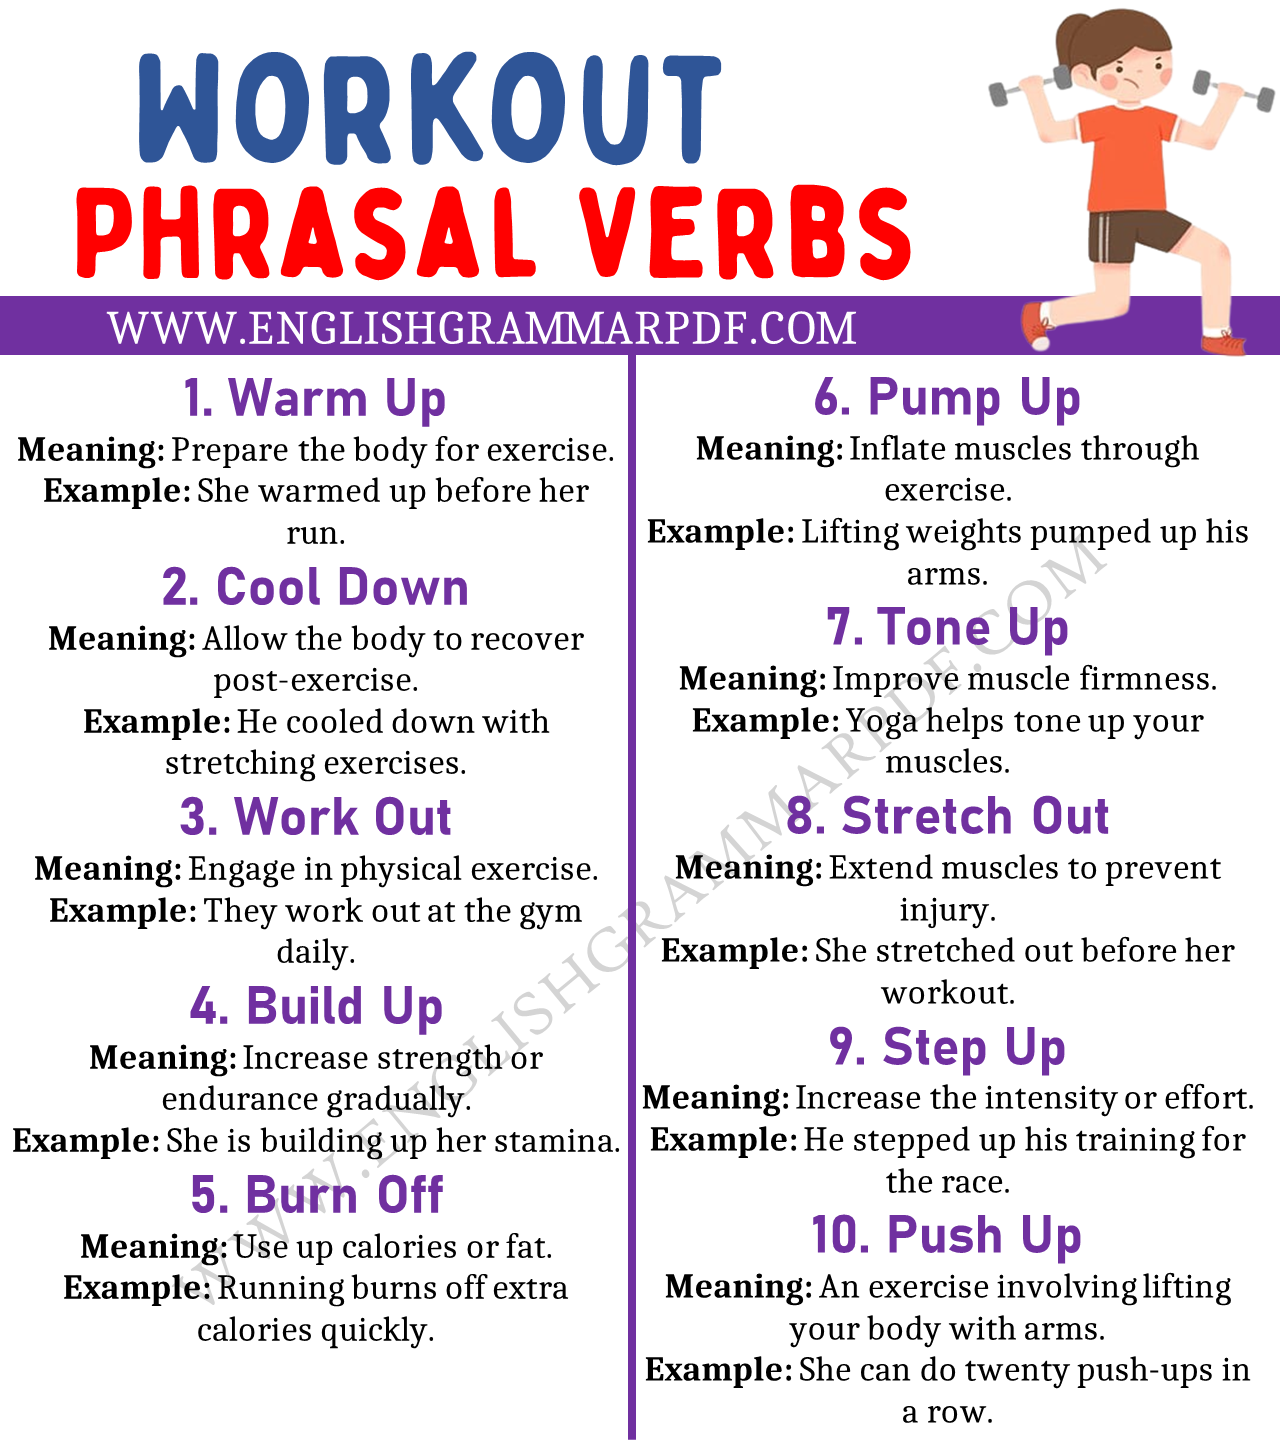 Workout Phrasal Verbs